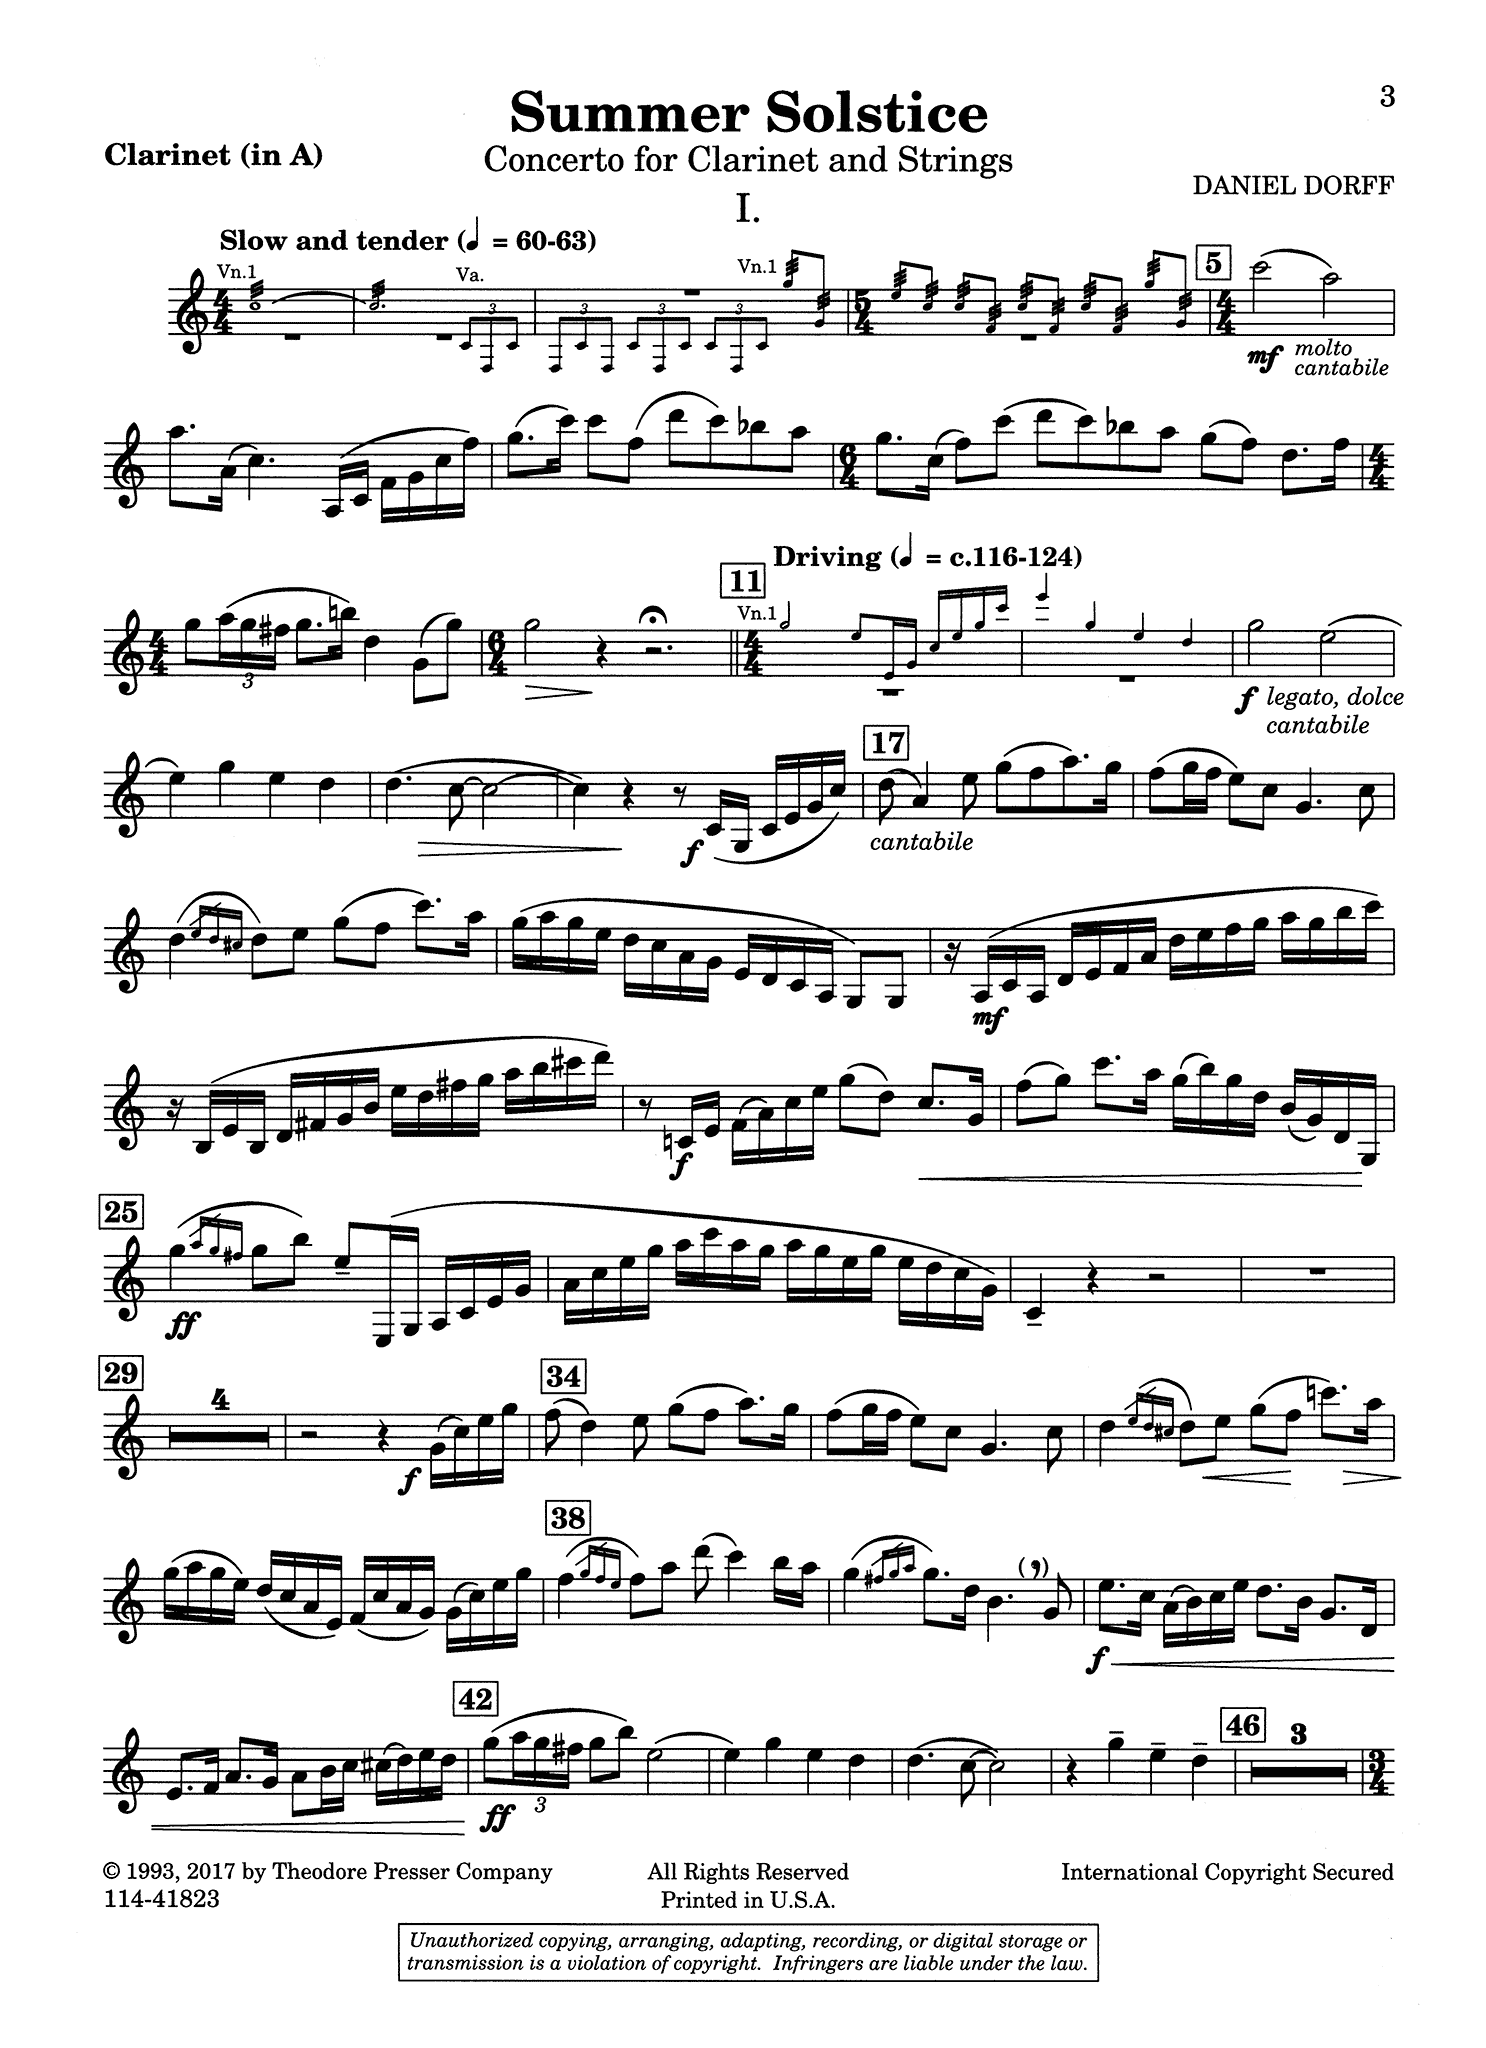 Dorff Summer Solstice clarinet concerto piano reduction solo part